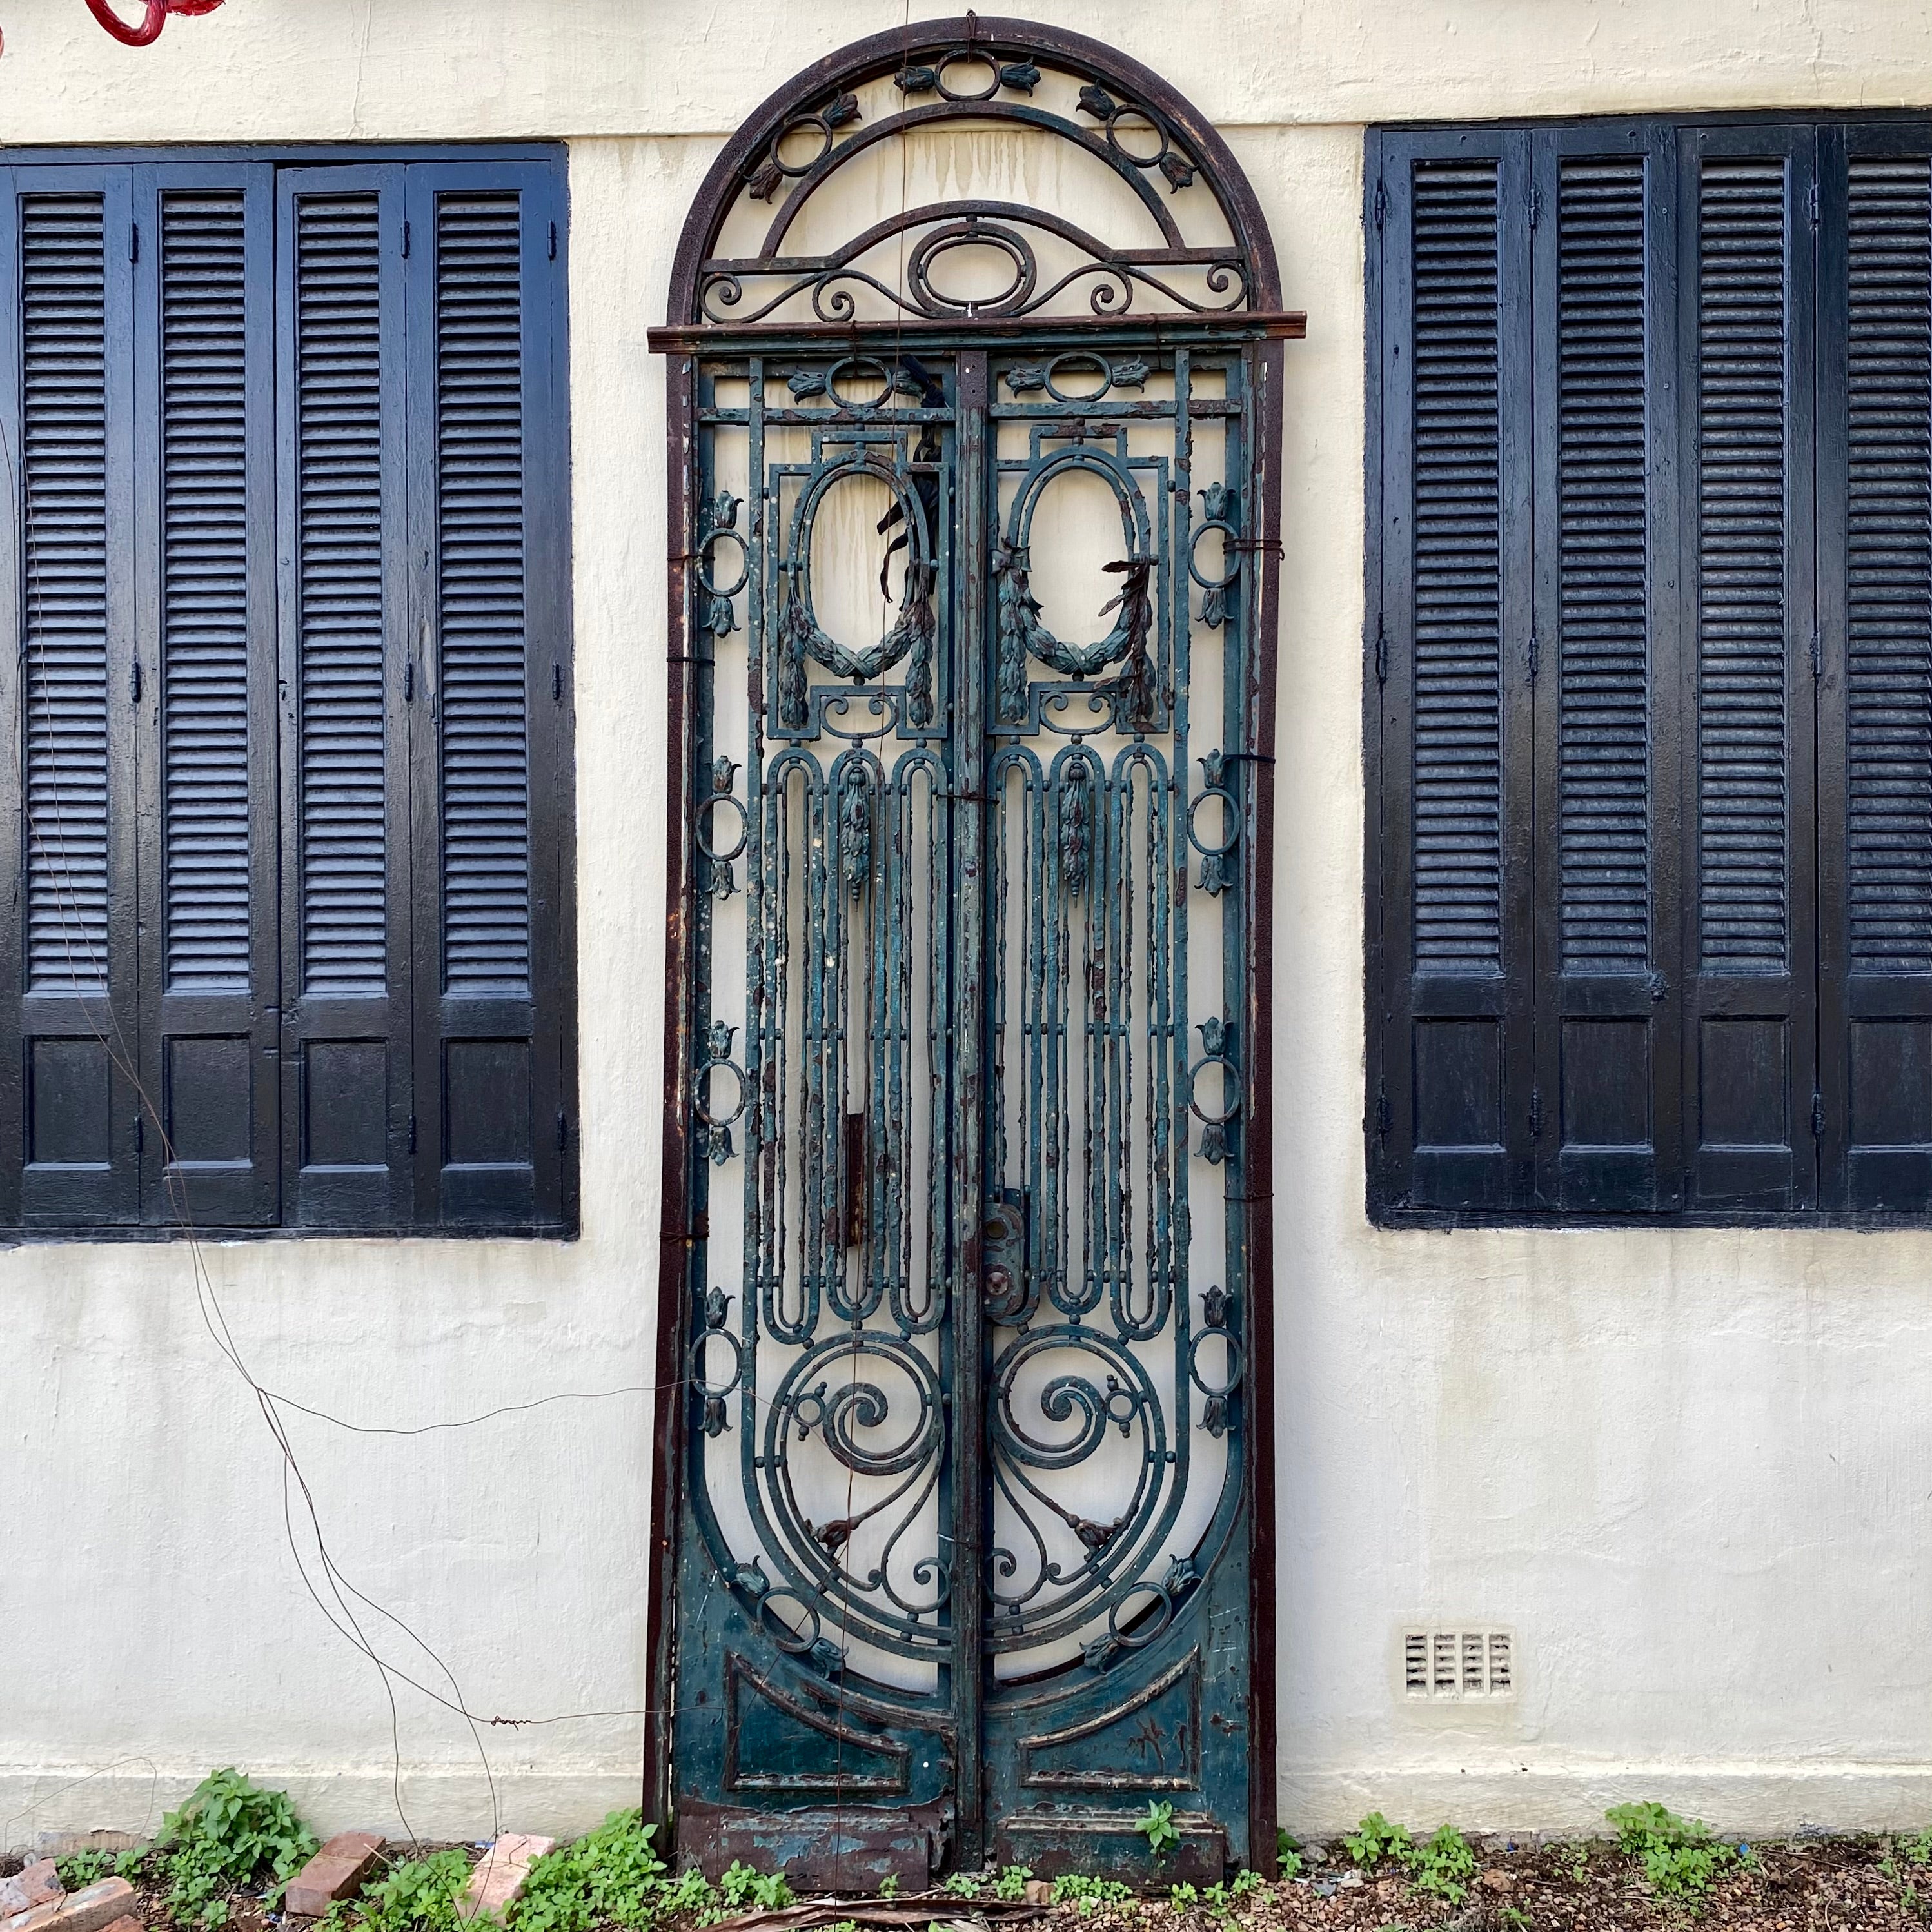 Art Nouveau Arched Forged Steel Gate